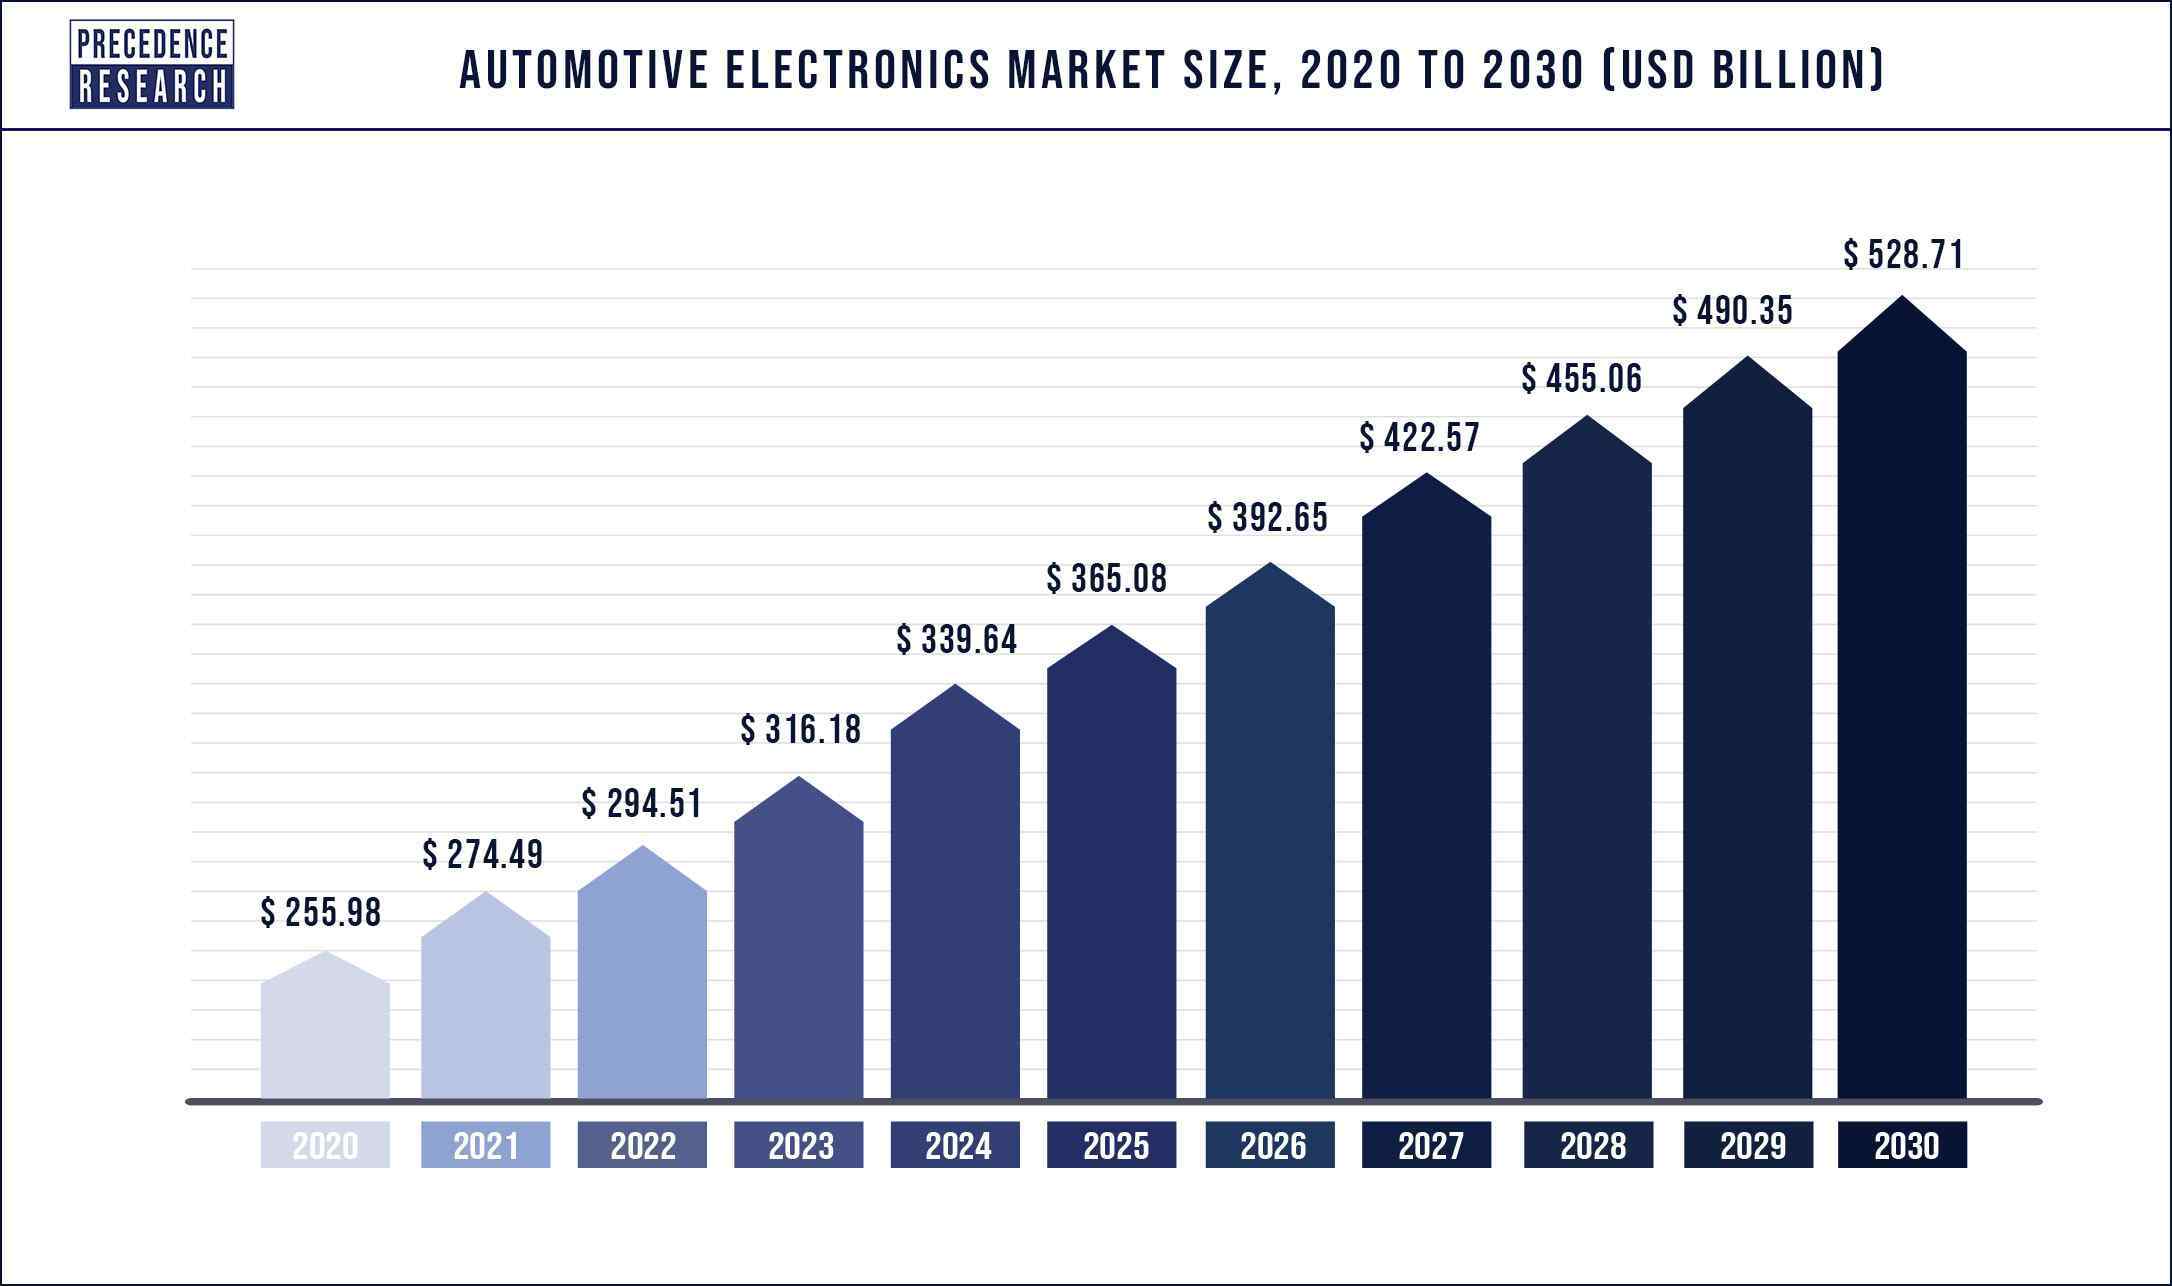 Automotive Electronics Market Size 2020-2030